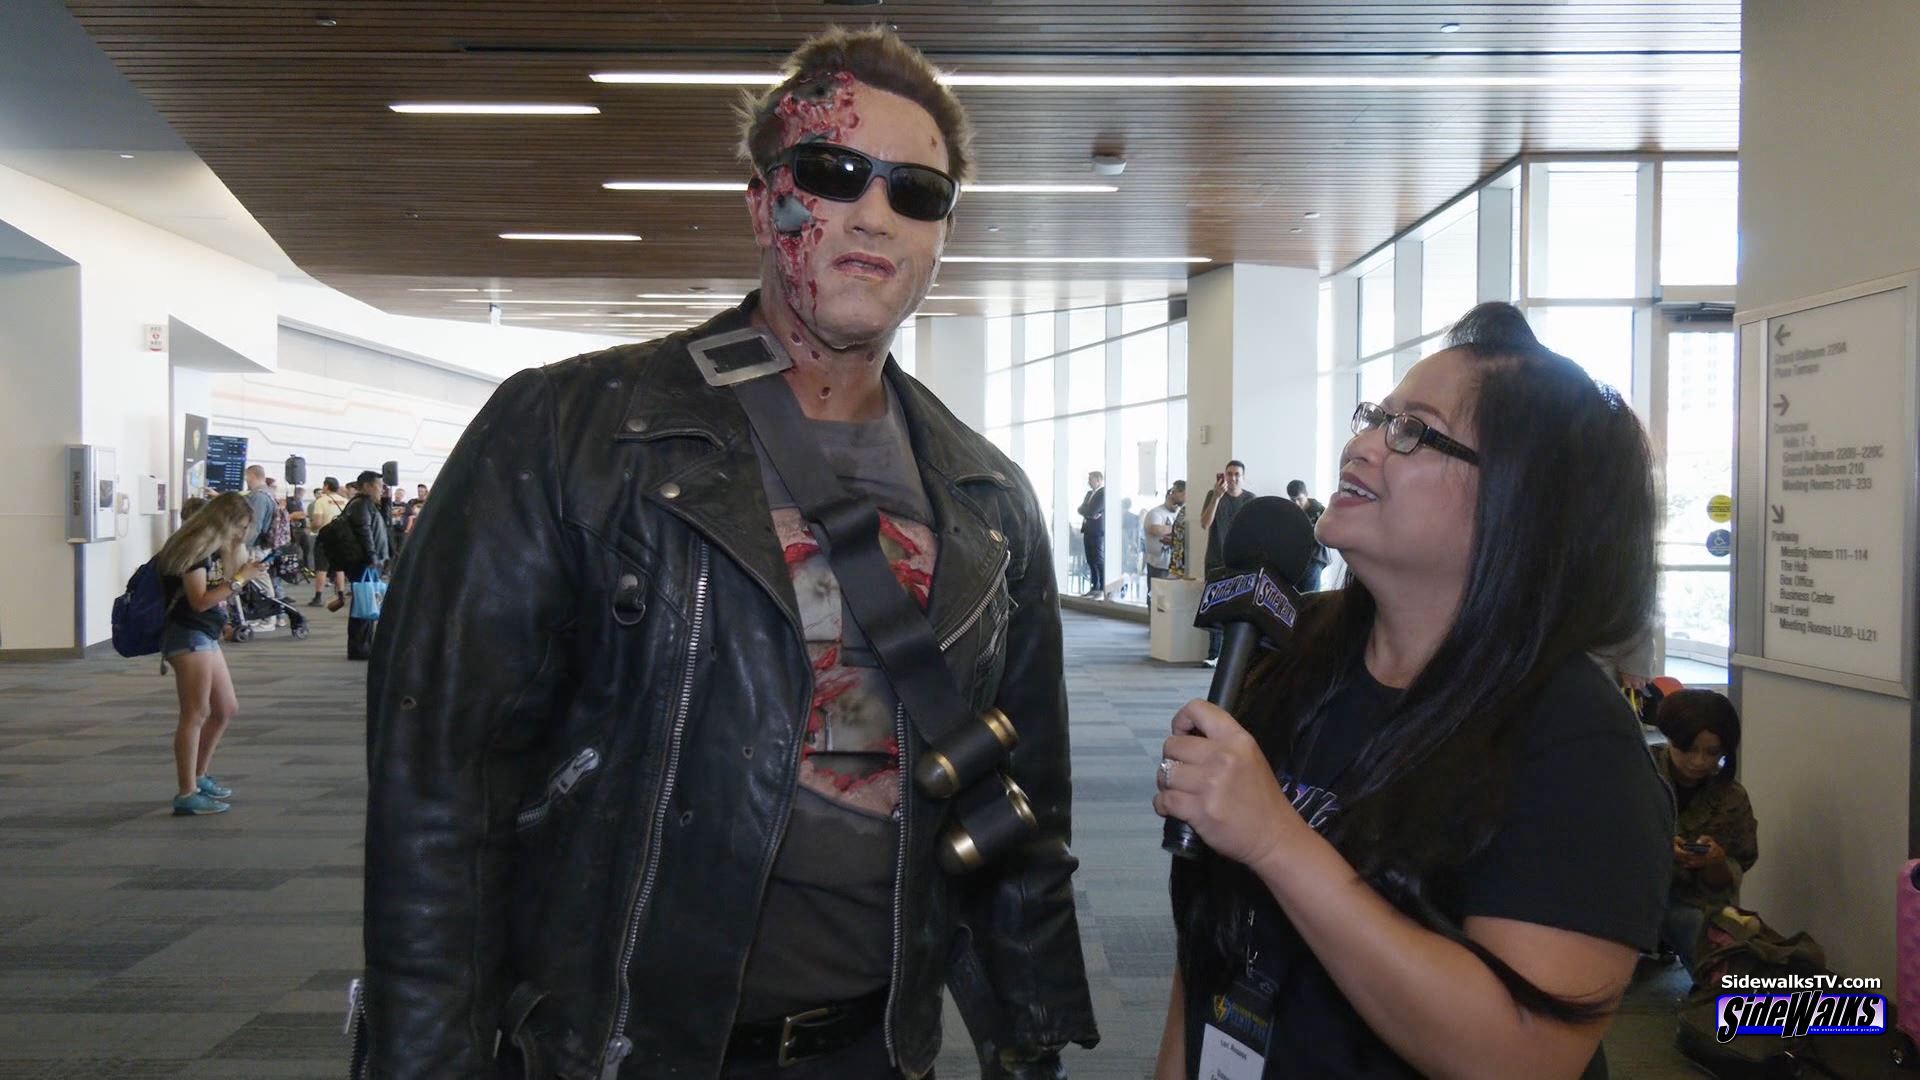 Lori with cosplayer The Terminator at SVCC